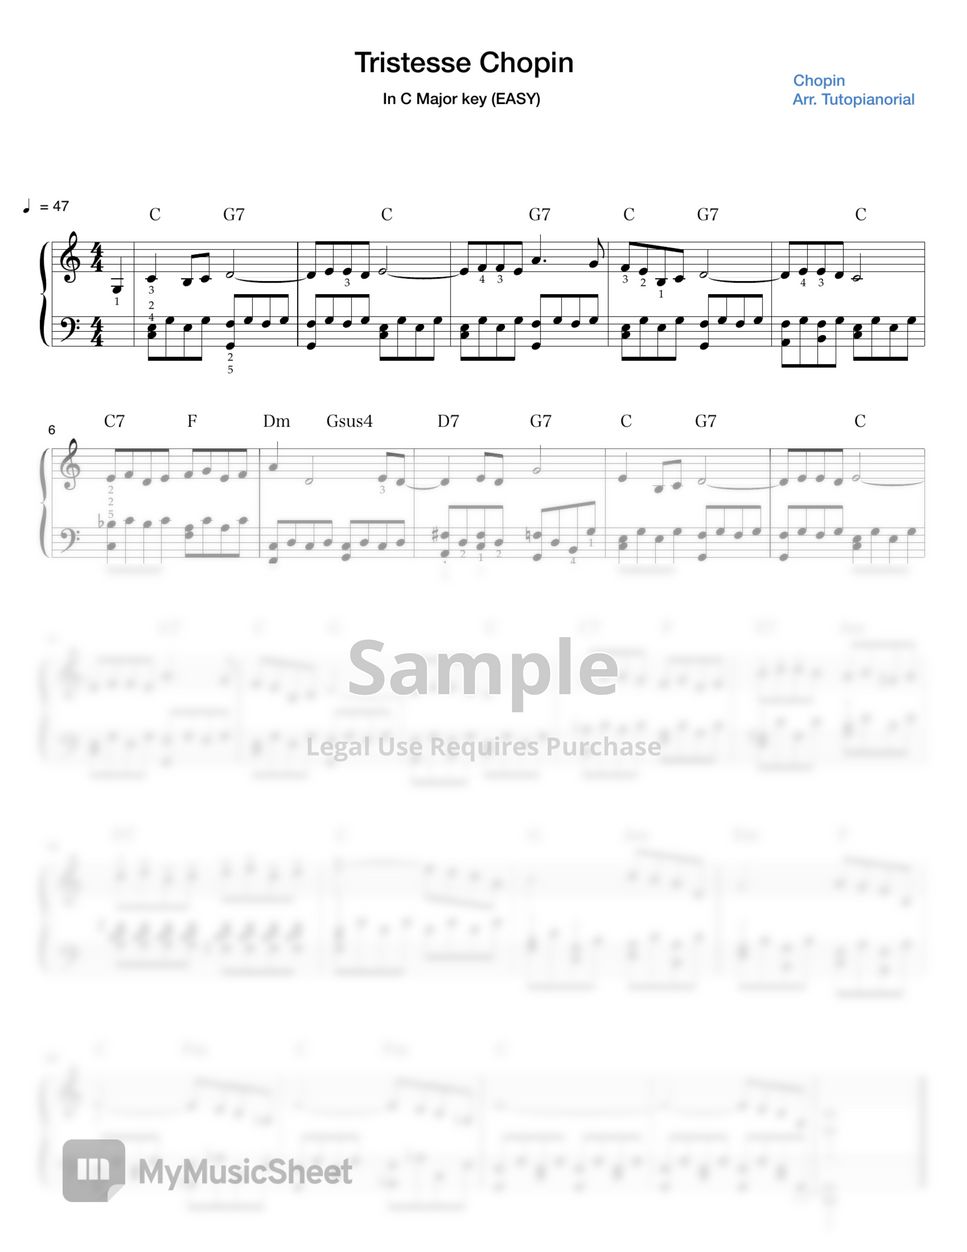 Chopin - Tristesse - Etude op.10 no.3 (EASY in C Major) by Tutopianorial